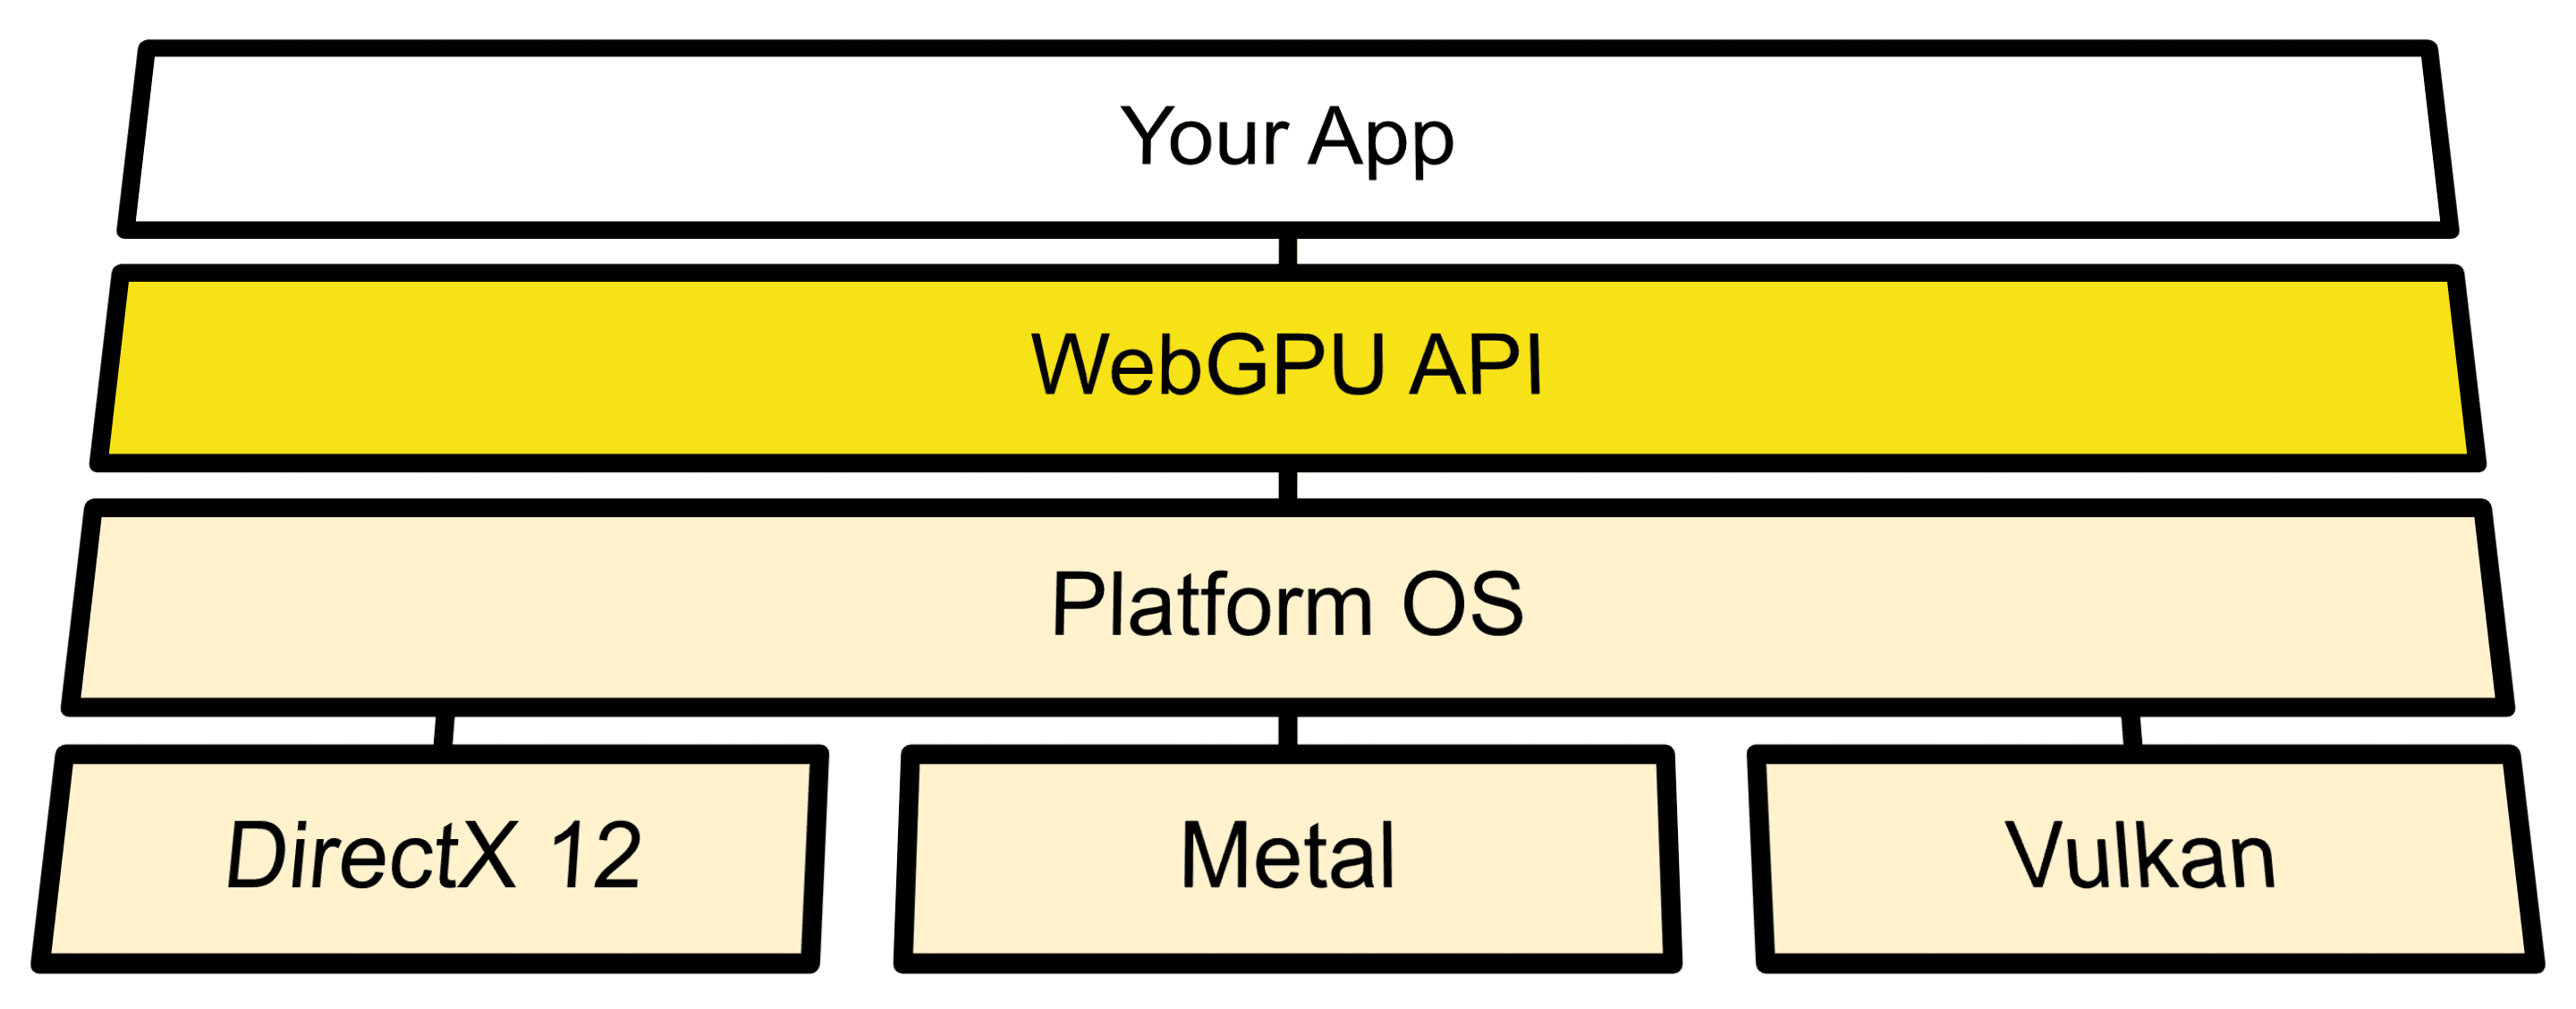 OS API와 Direct3D 12, Metal, Vulkan 간의 WebGPU 연결을 보여주는 아키텍처 다이어그램